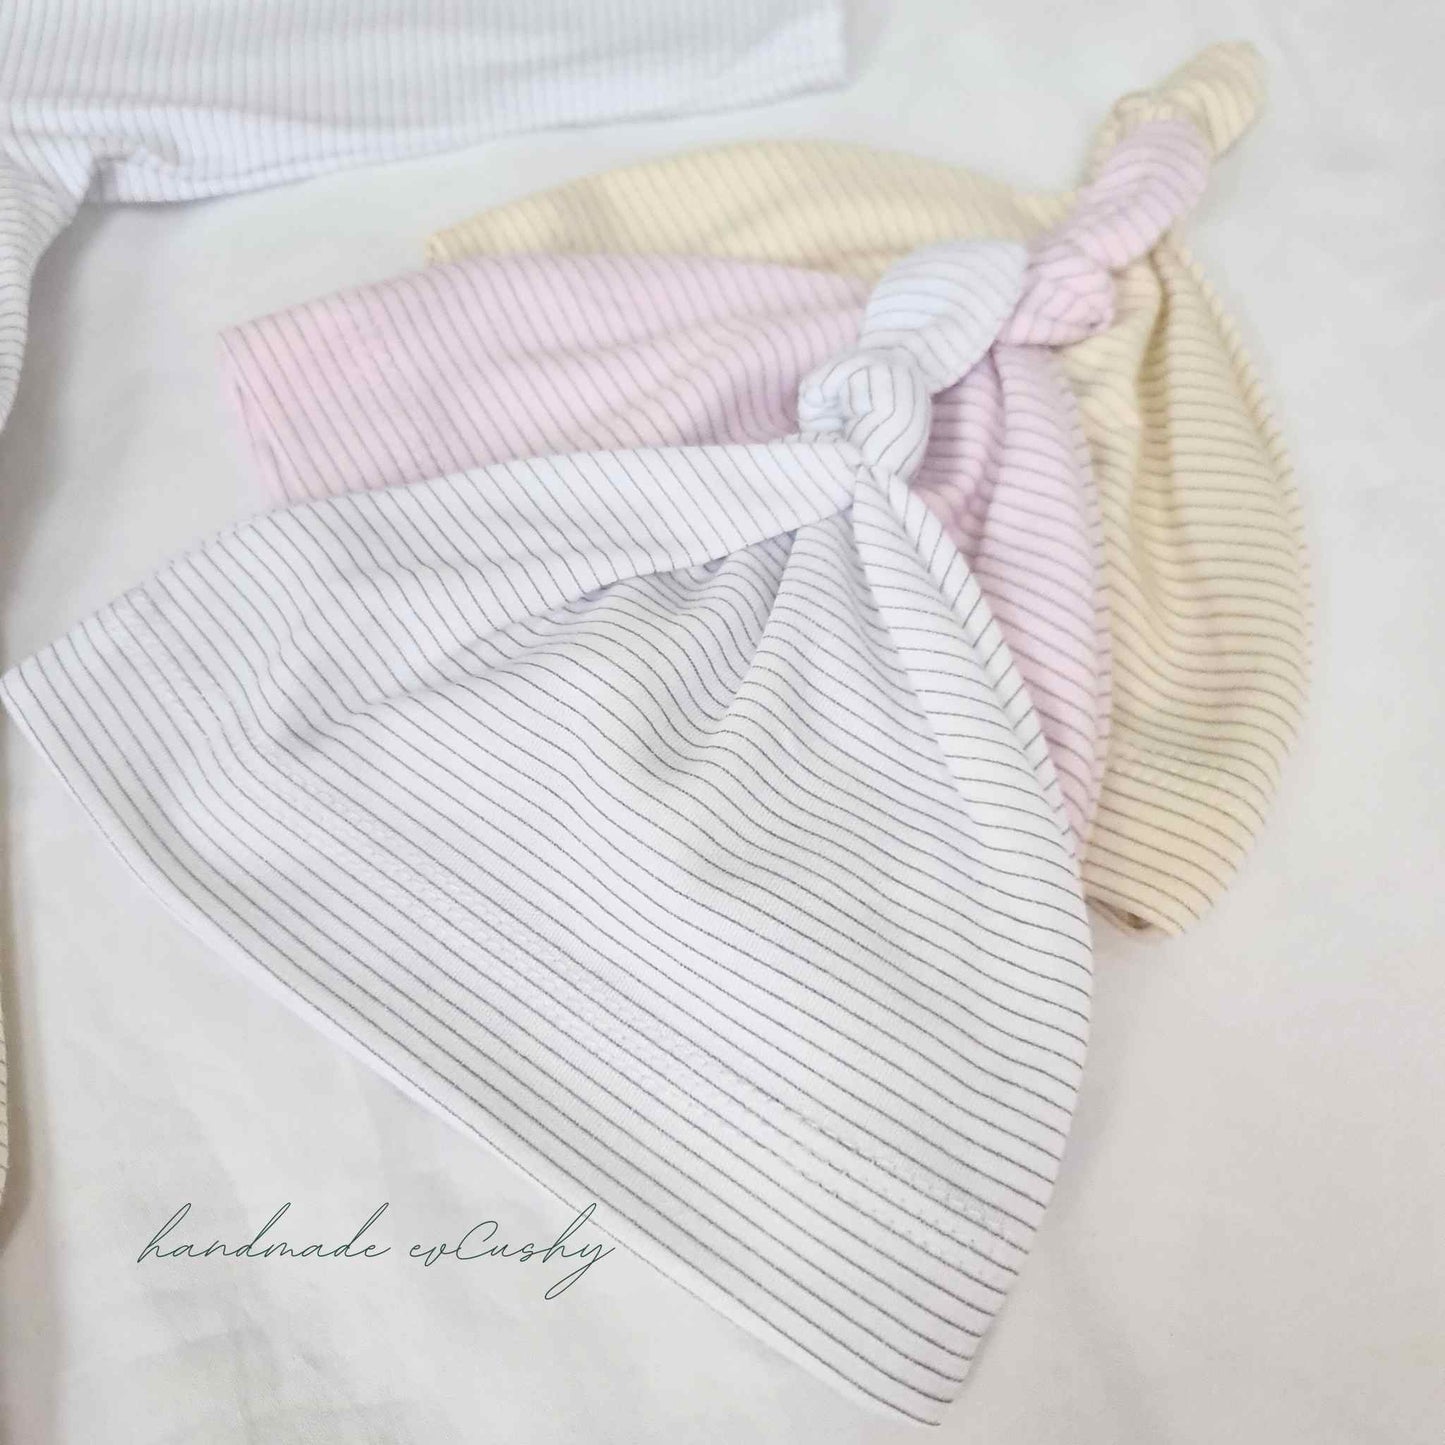 newborn baby sleeping bag 0-3 months kangaroo pouch and hats white pink yellow evcushy